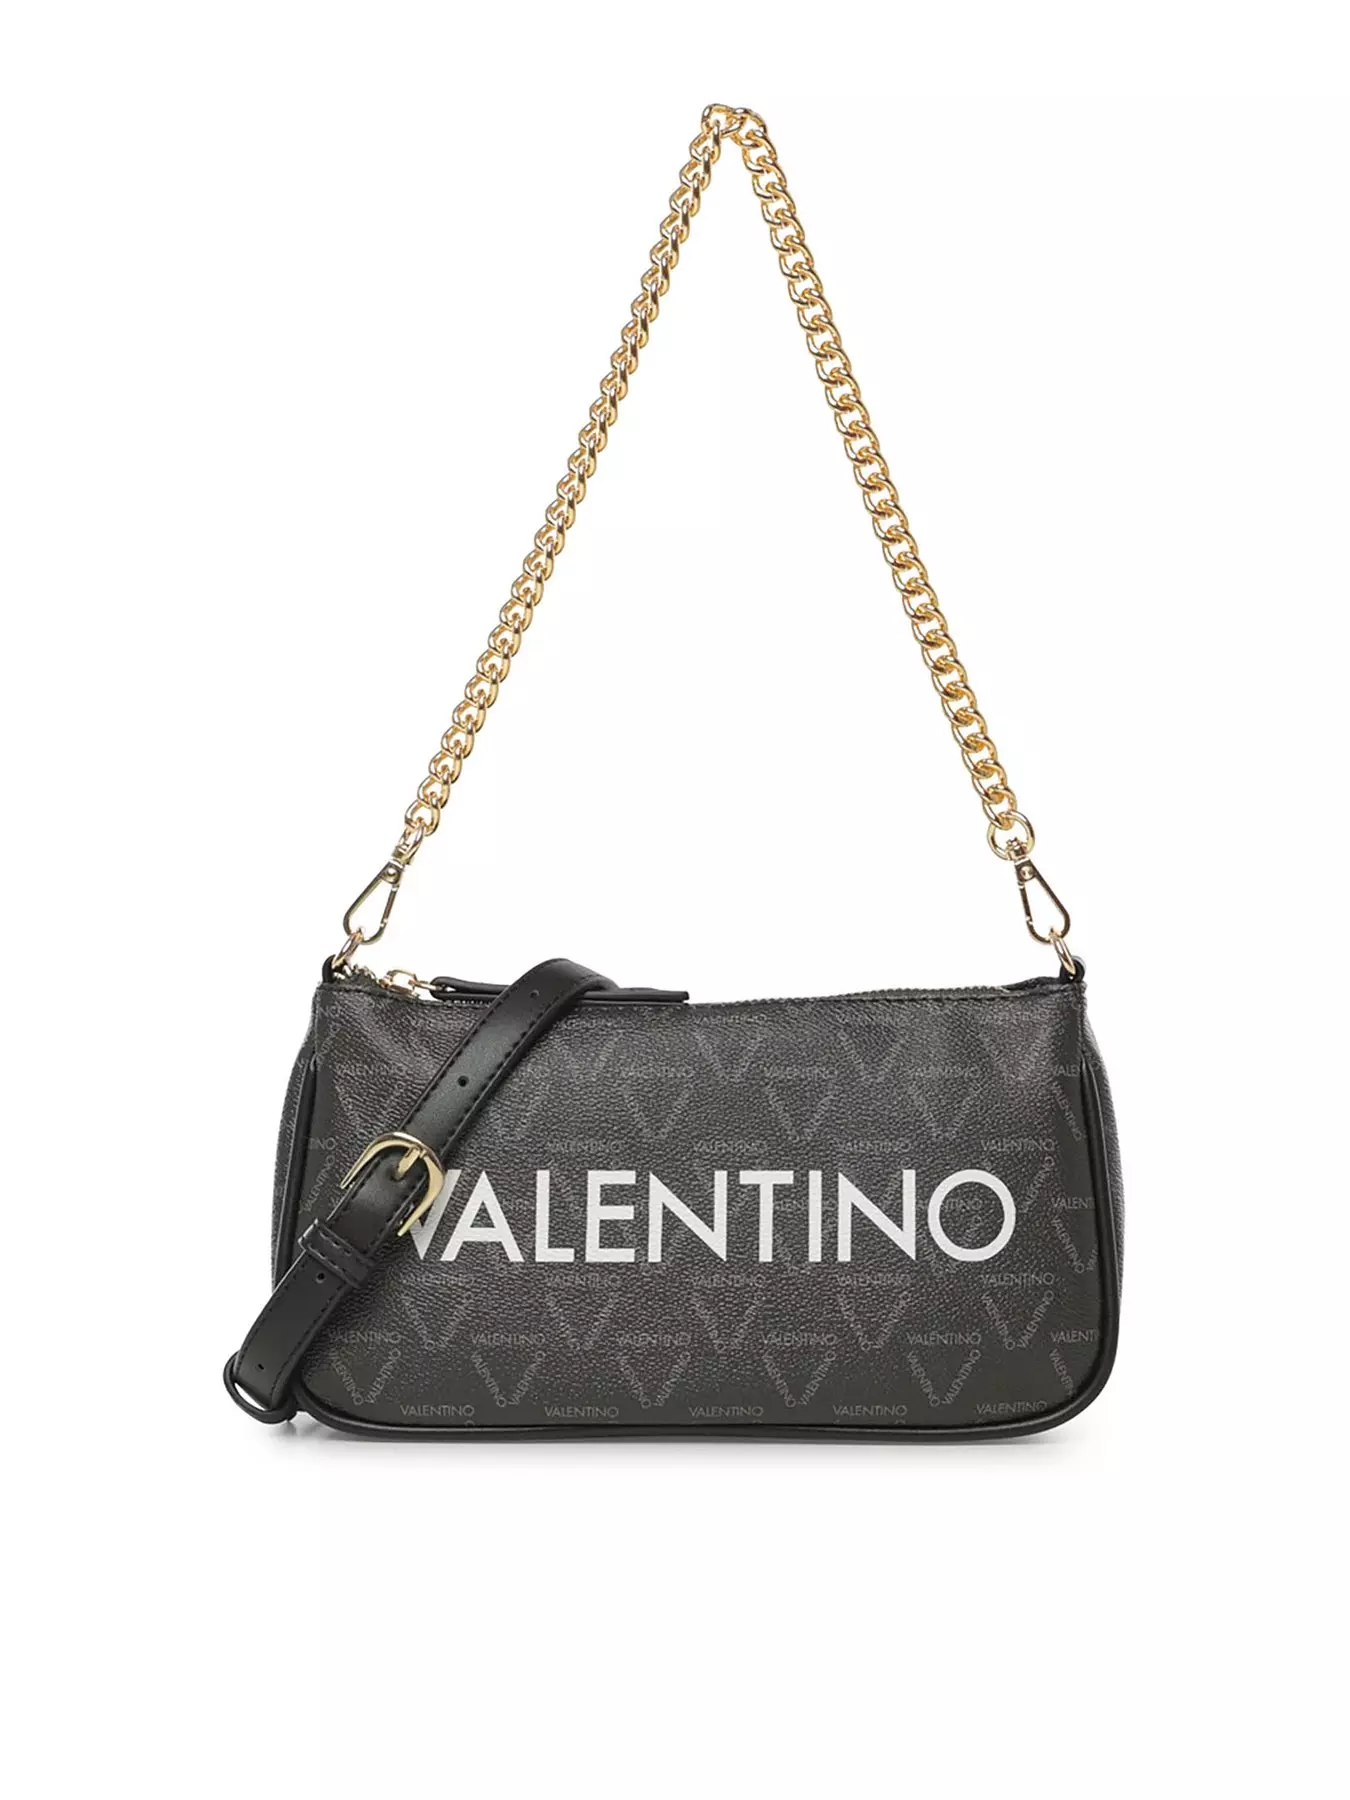 Valentino Bags Liuto Shoulder Bag - Ecru/multi